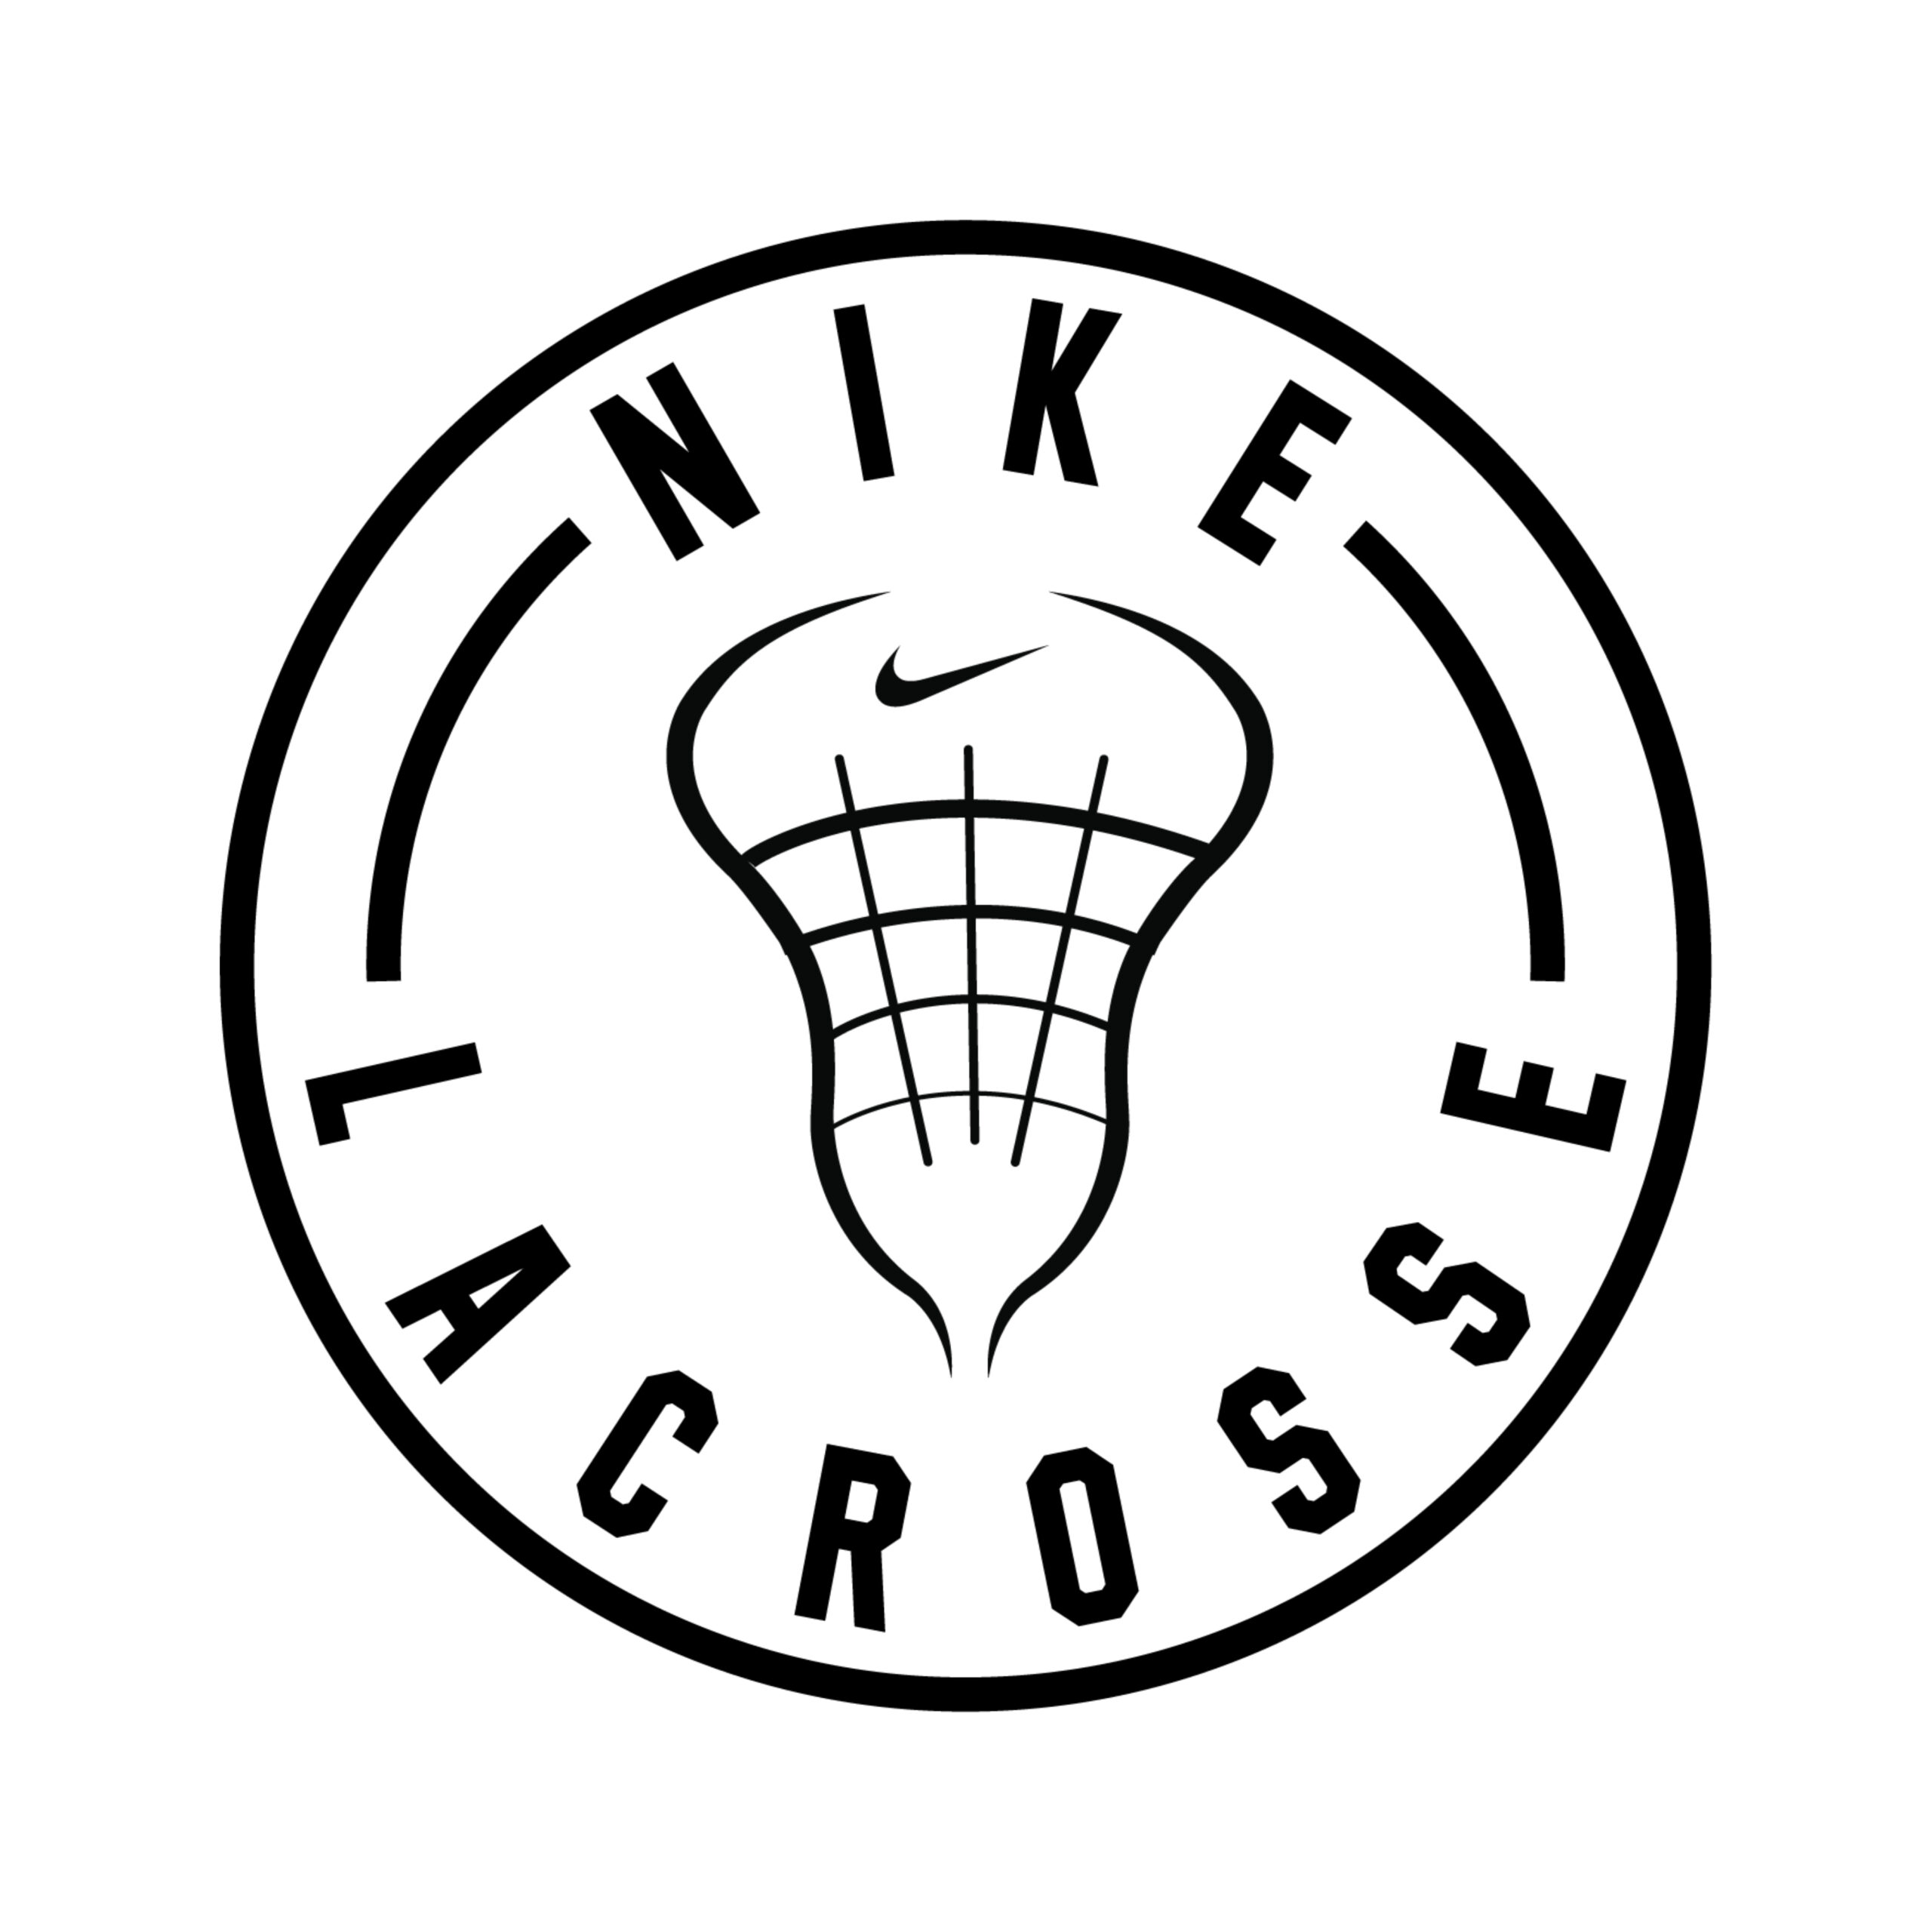 Nike Lacrosse